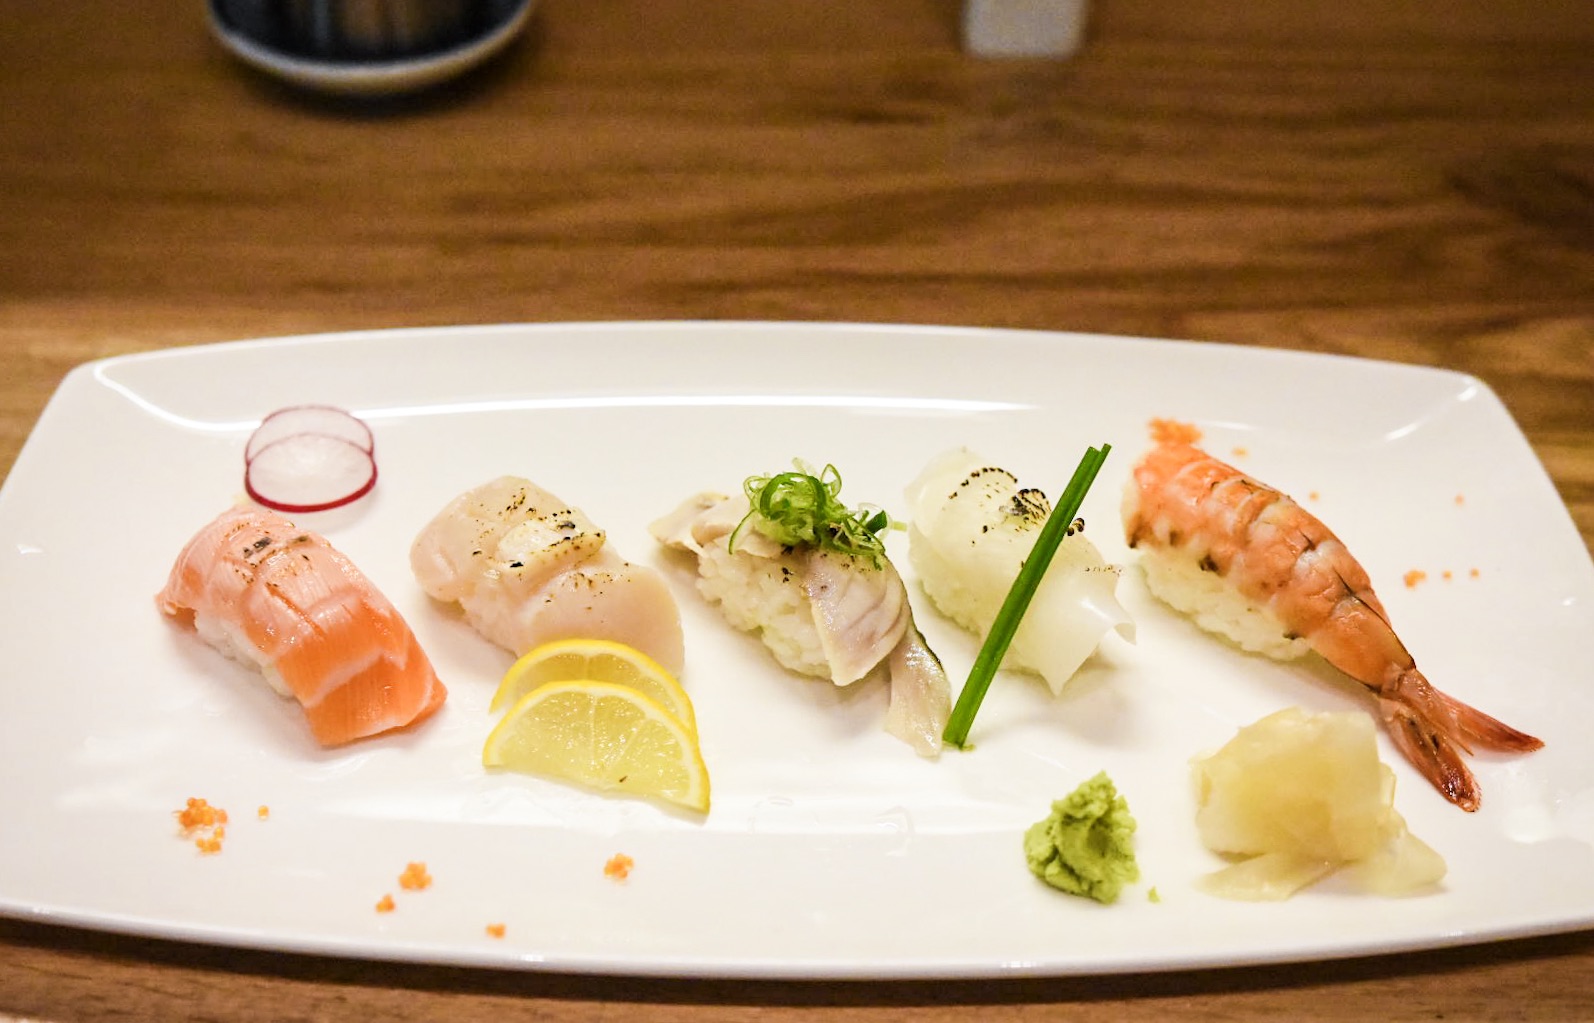 Aburi Sushi Set